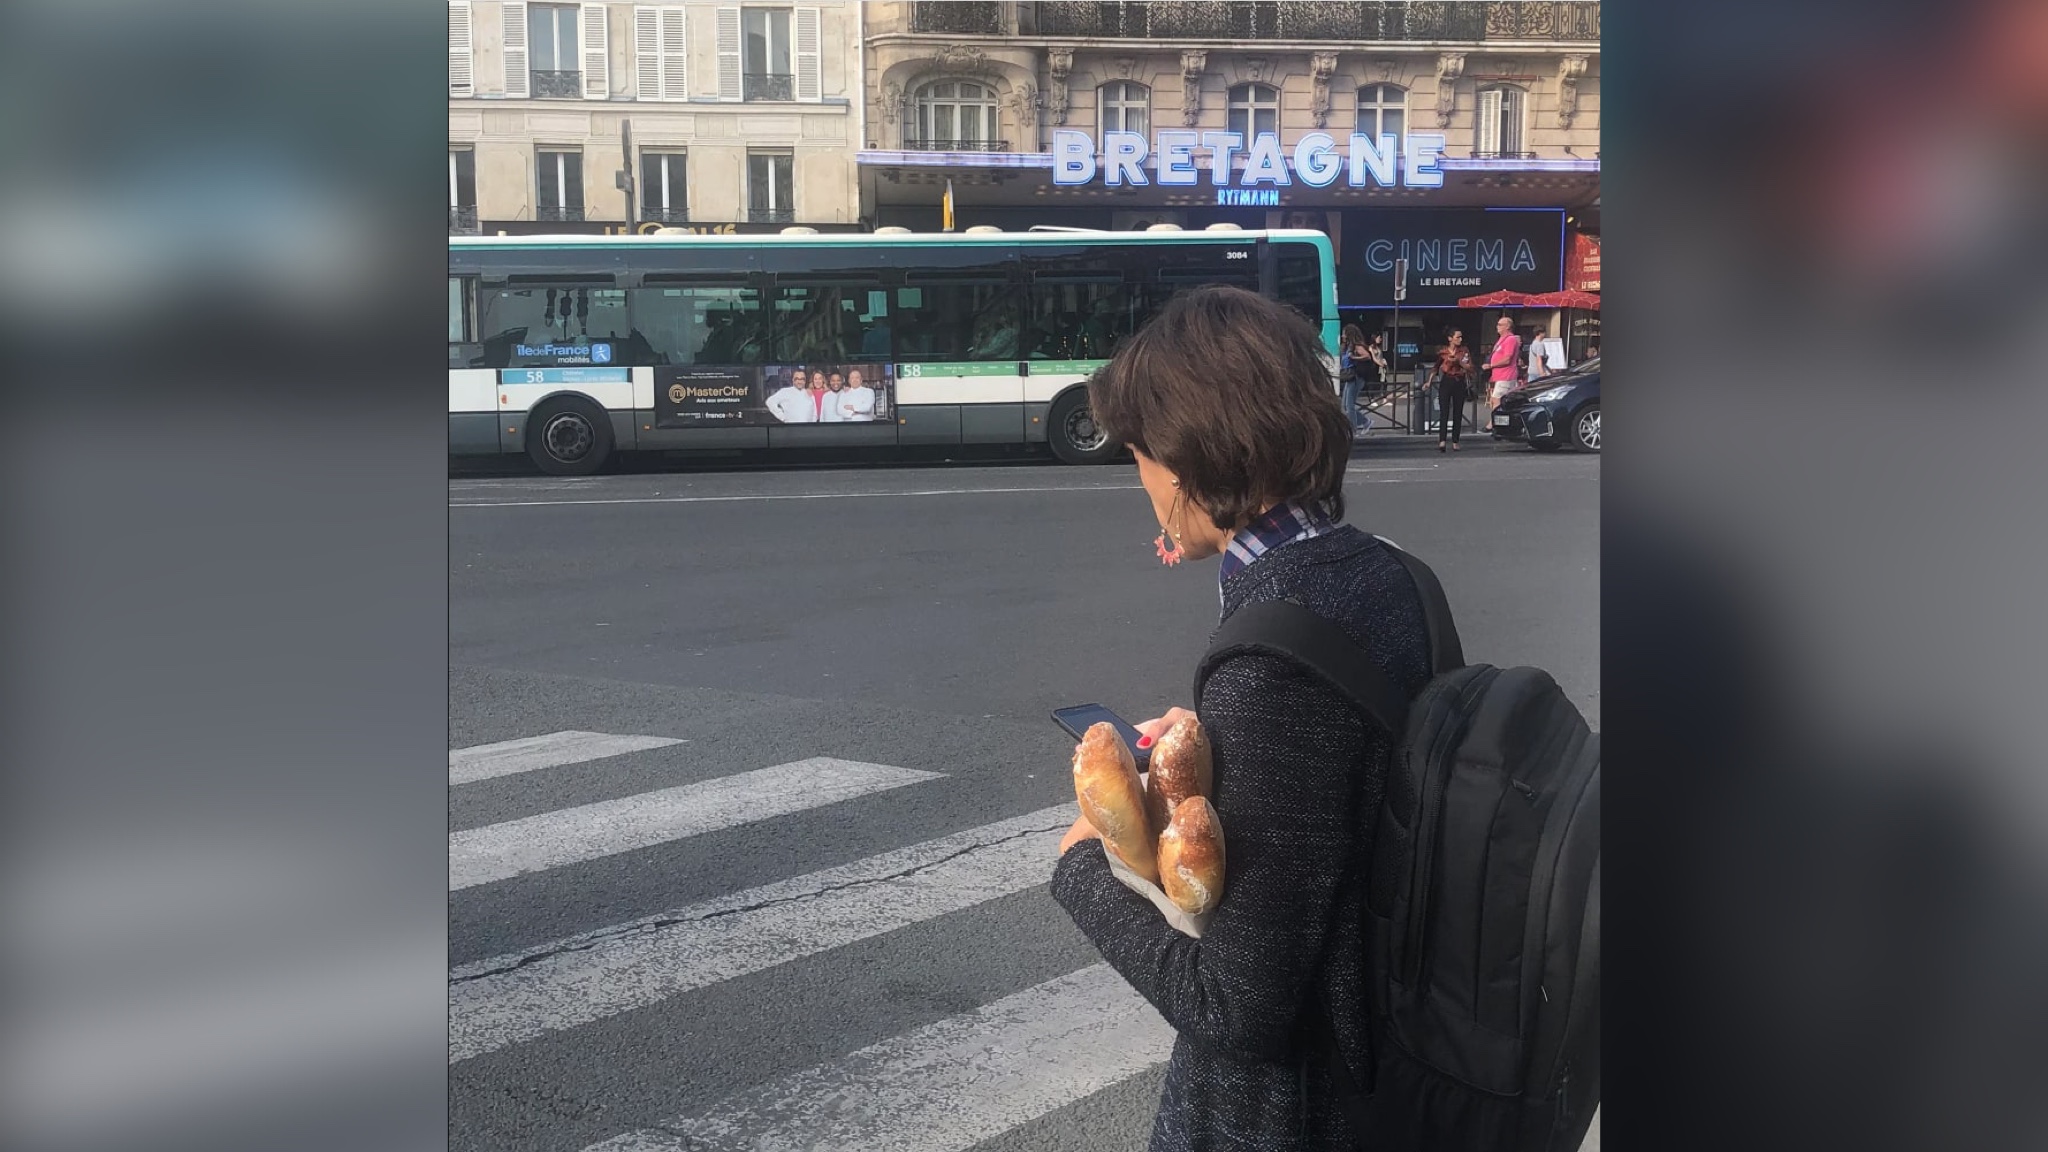 Парижанка с багетами. Фото © Дзен / "Дотошный турист"